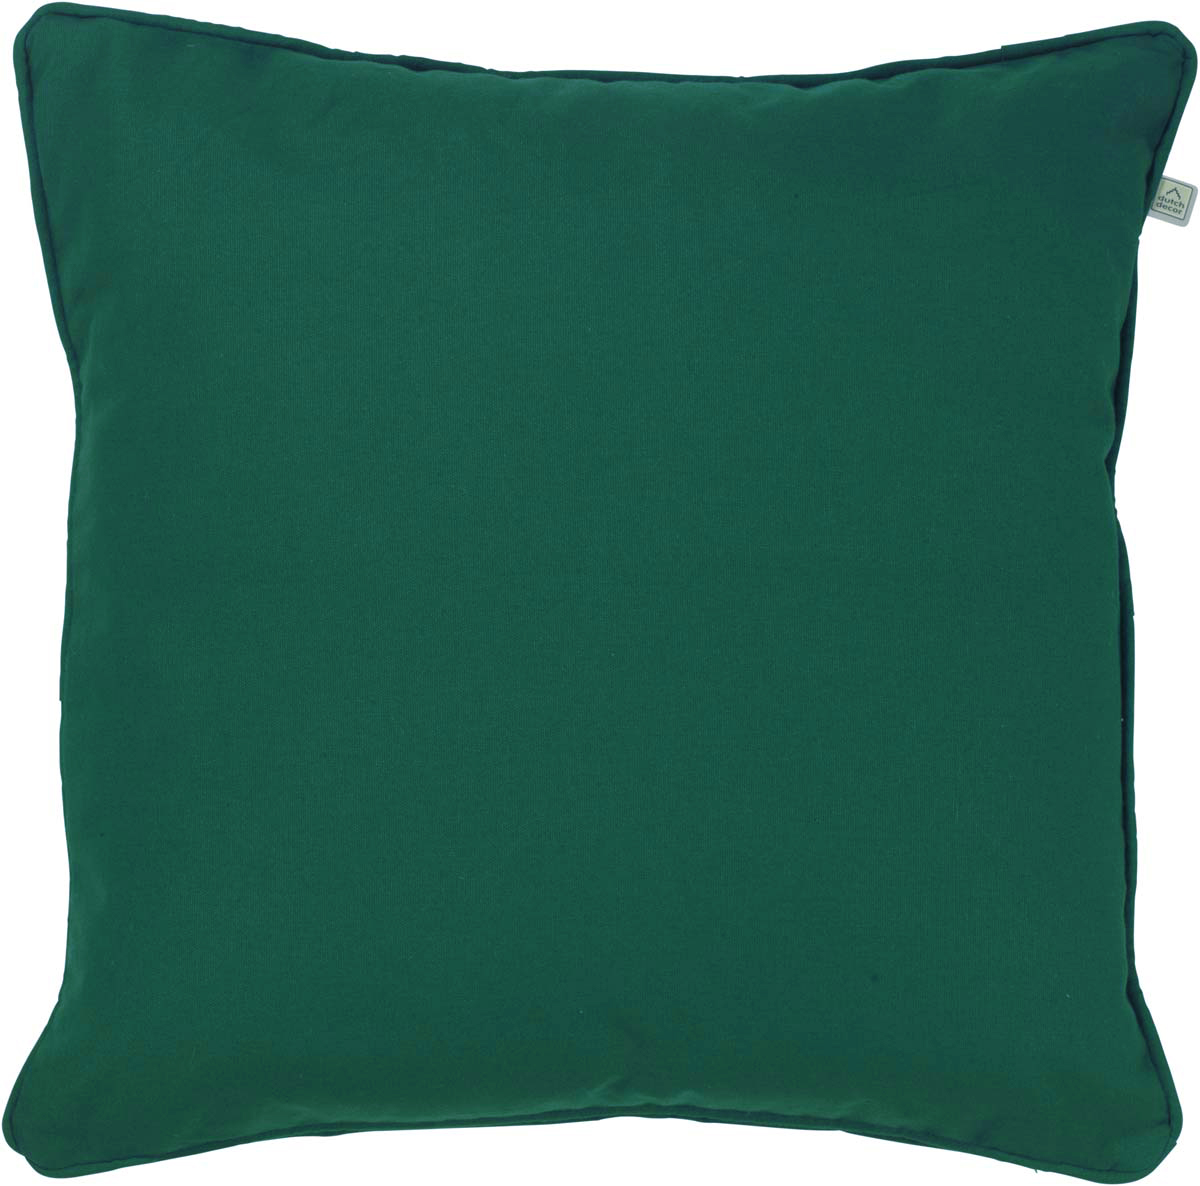 JAVA - Sierkussen smaragd 70x70 cm - groen